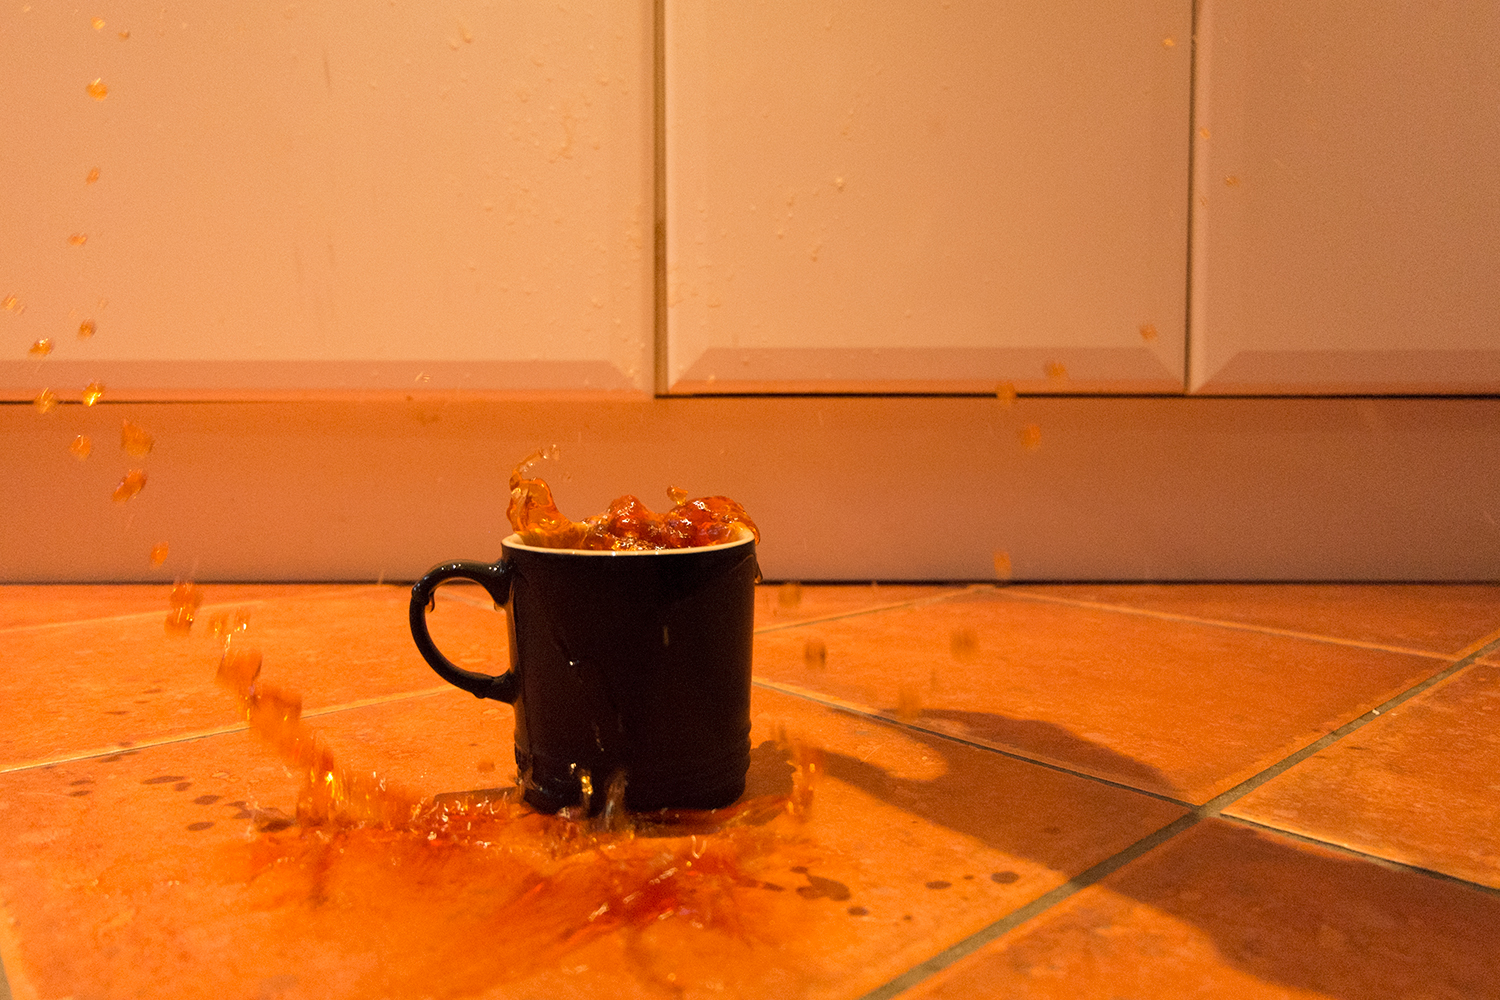 Tea splashing out of a mug on the kitchen floor